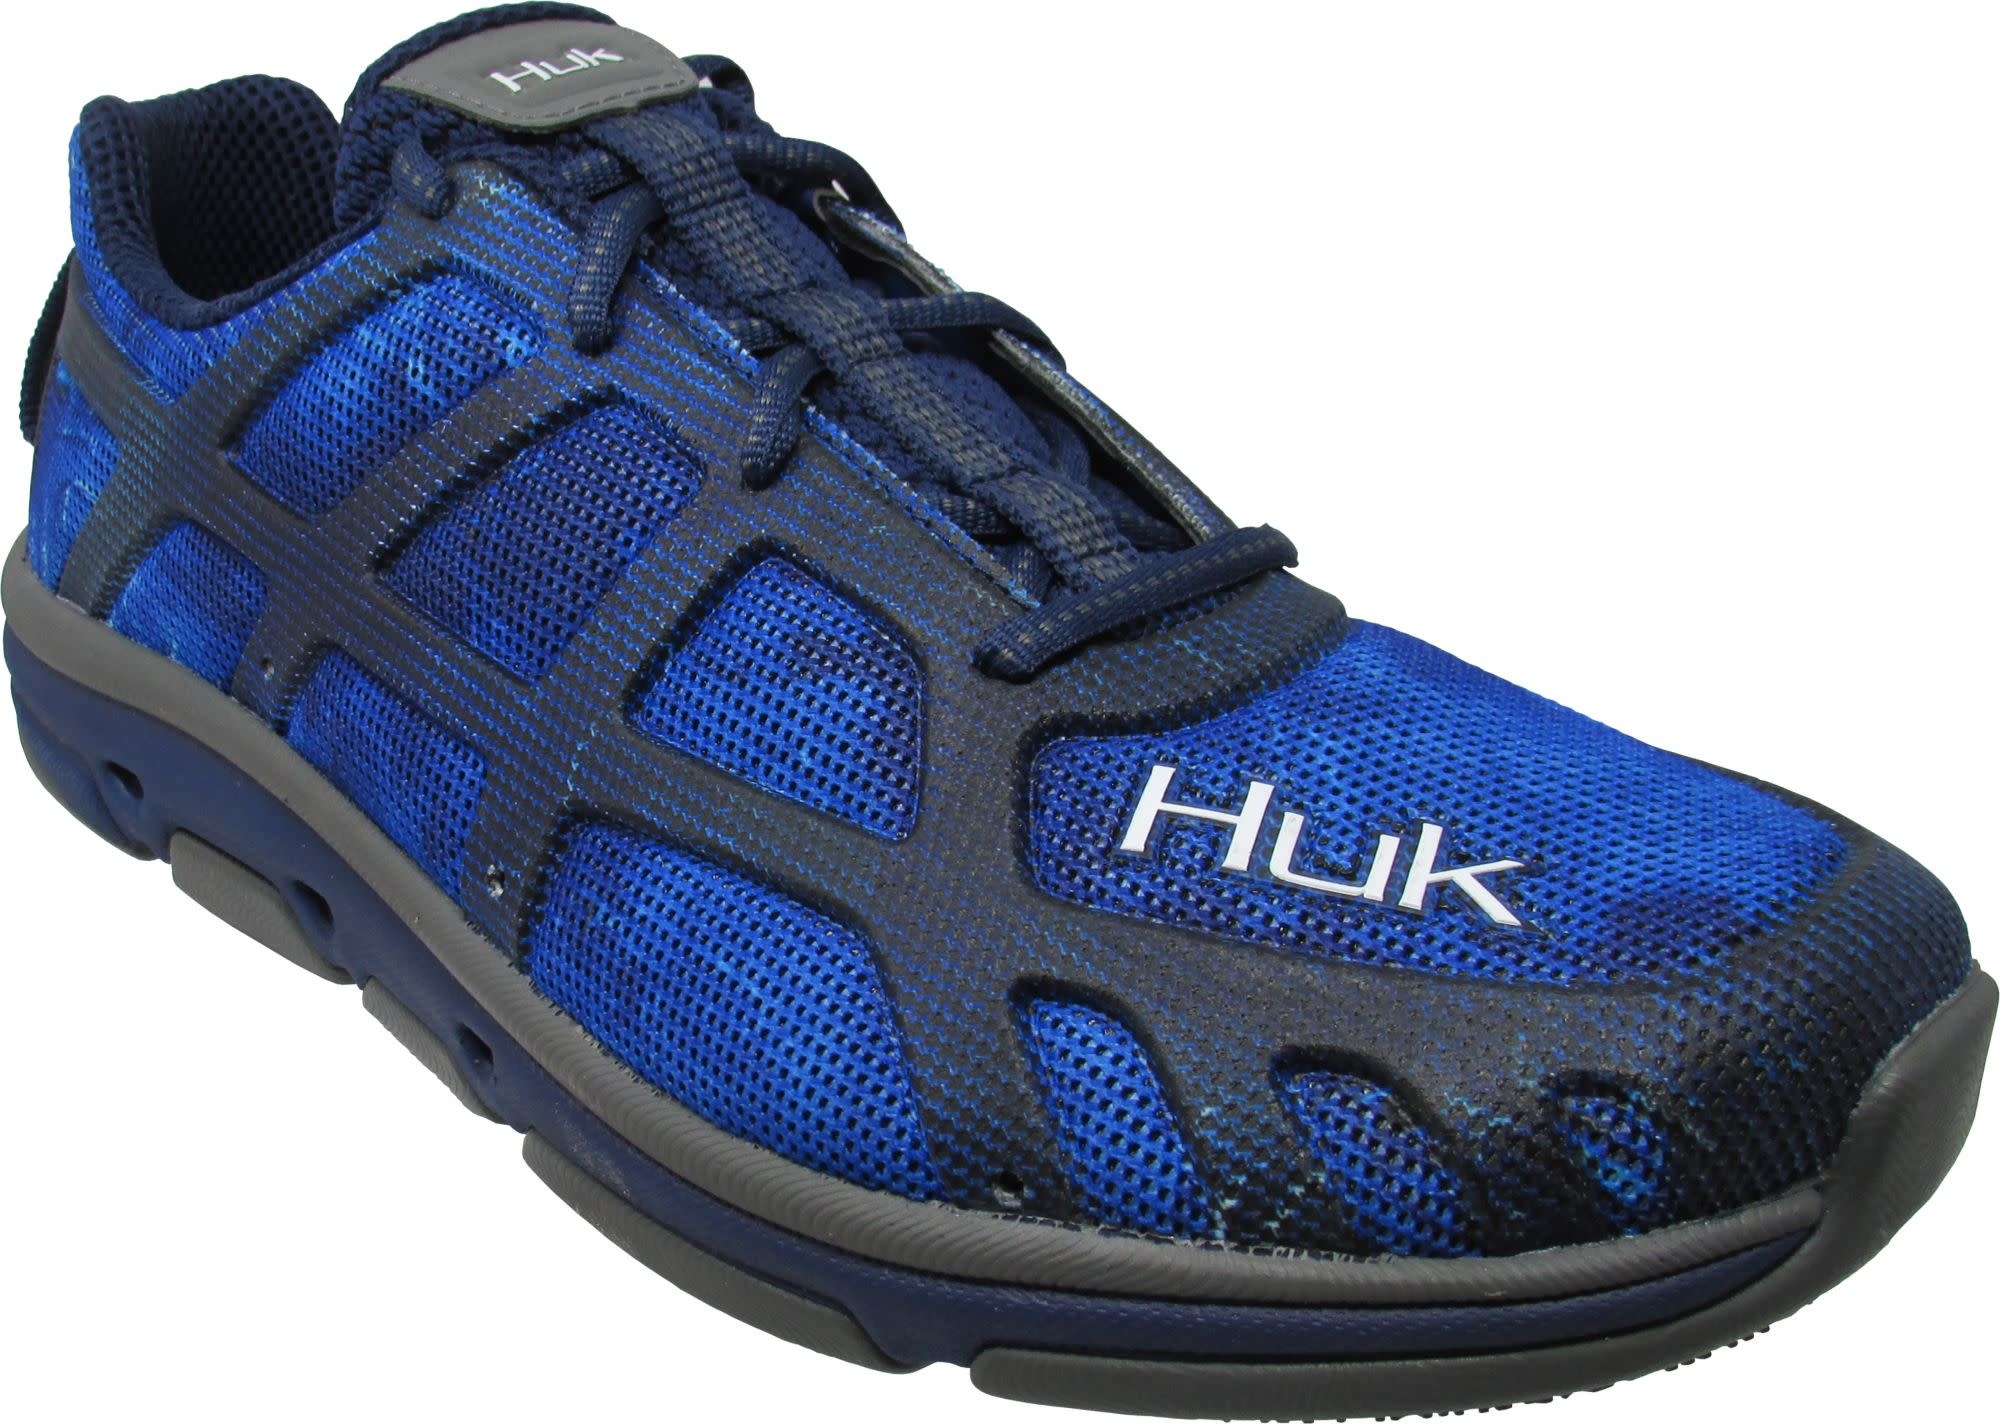 Huk Men's Subphantis Attack Gulf Stream Size 8 Fishing Shoes